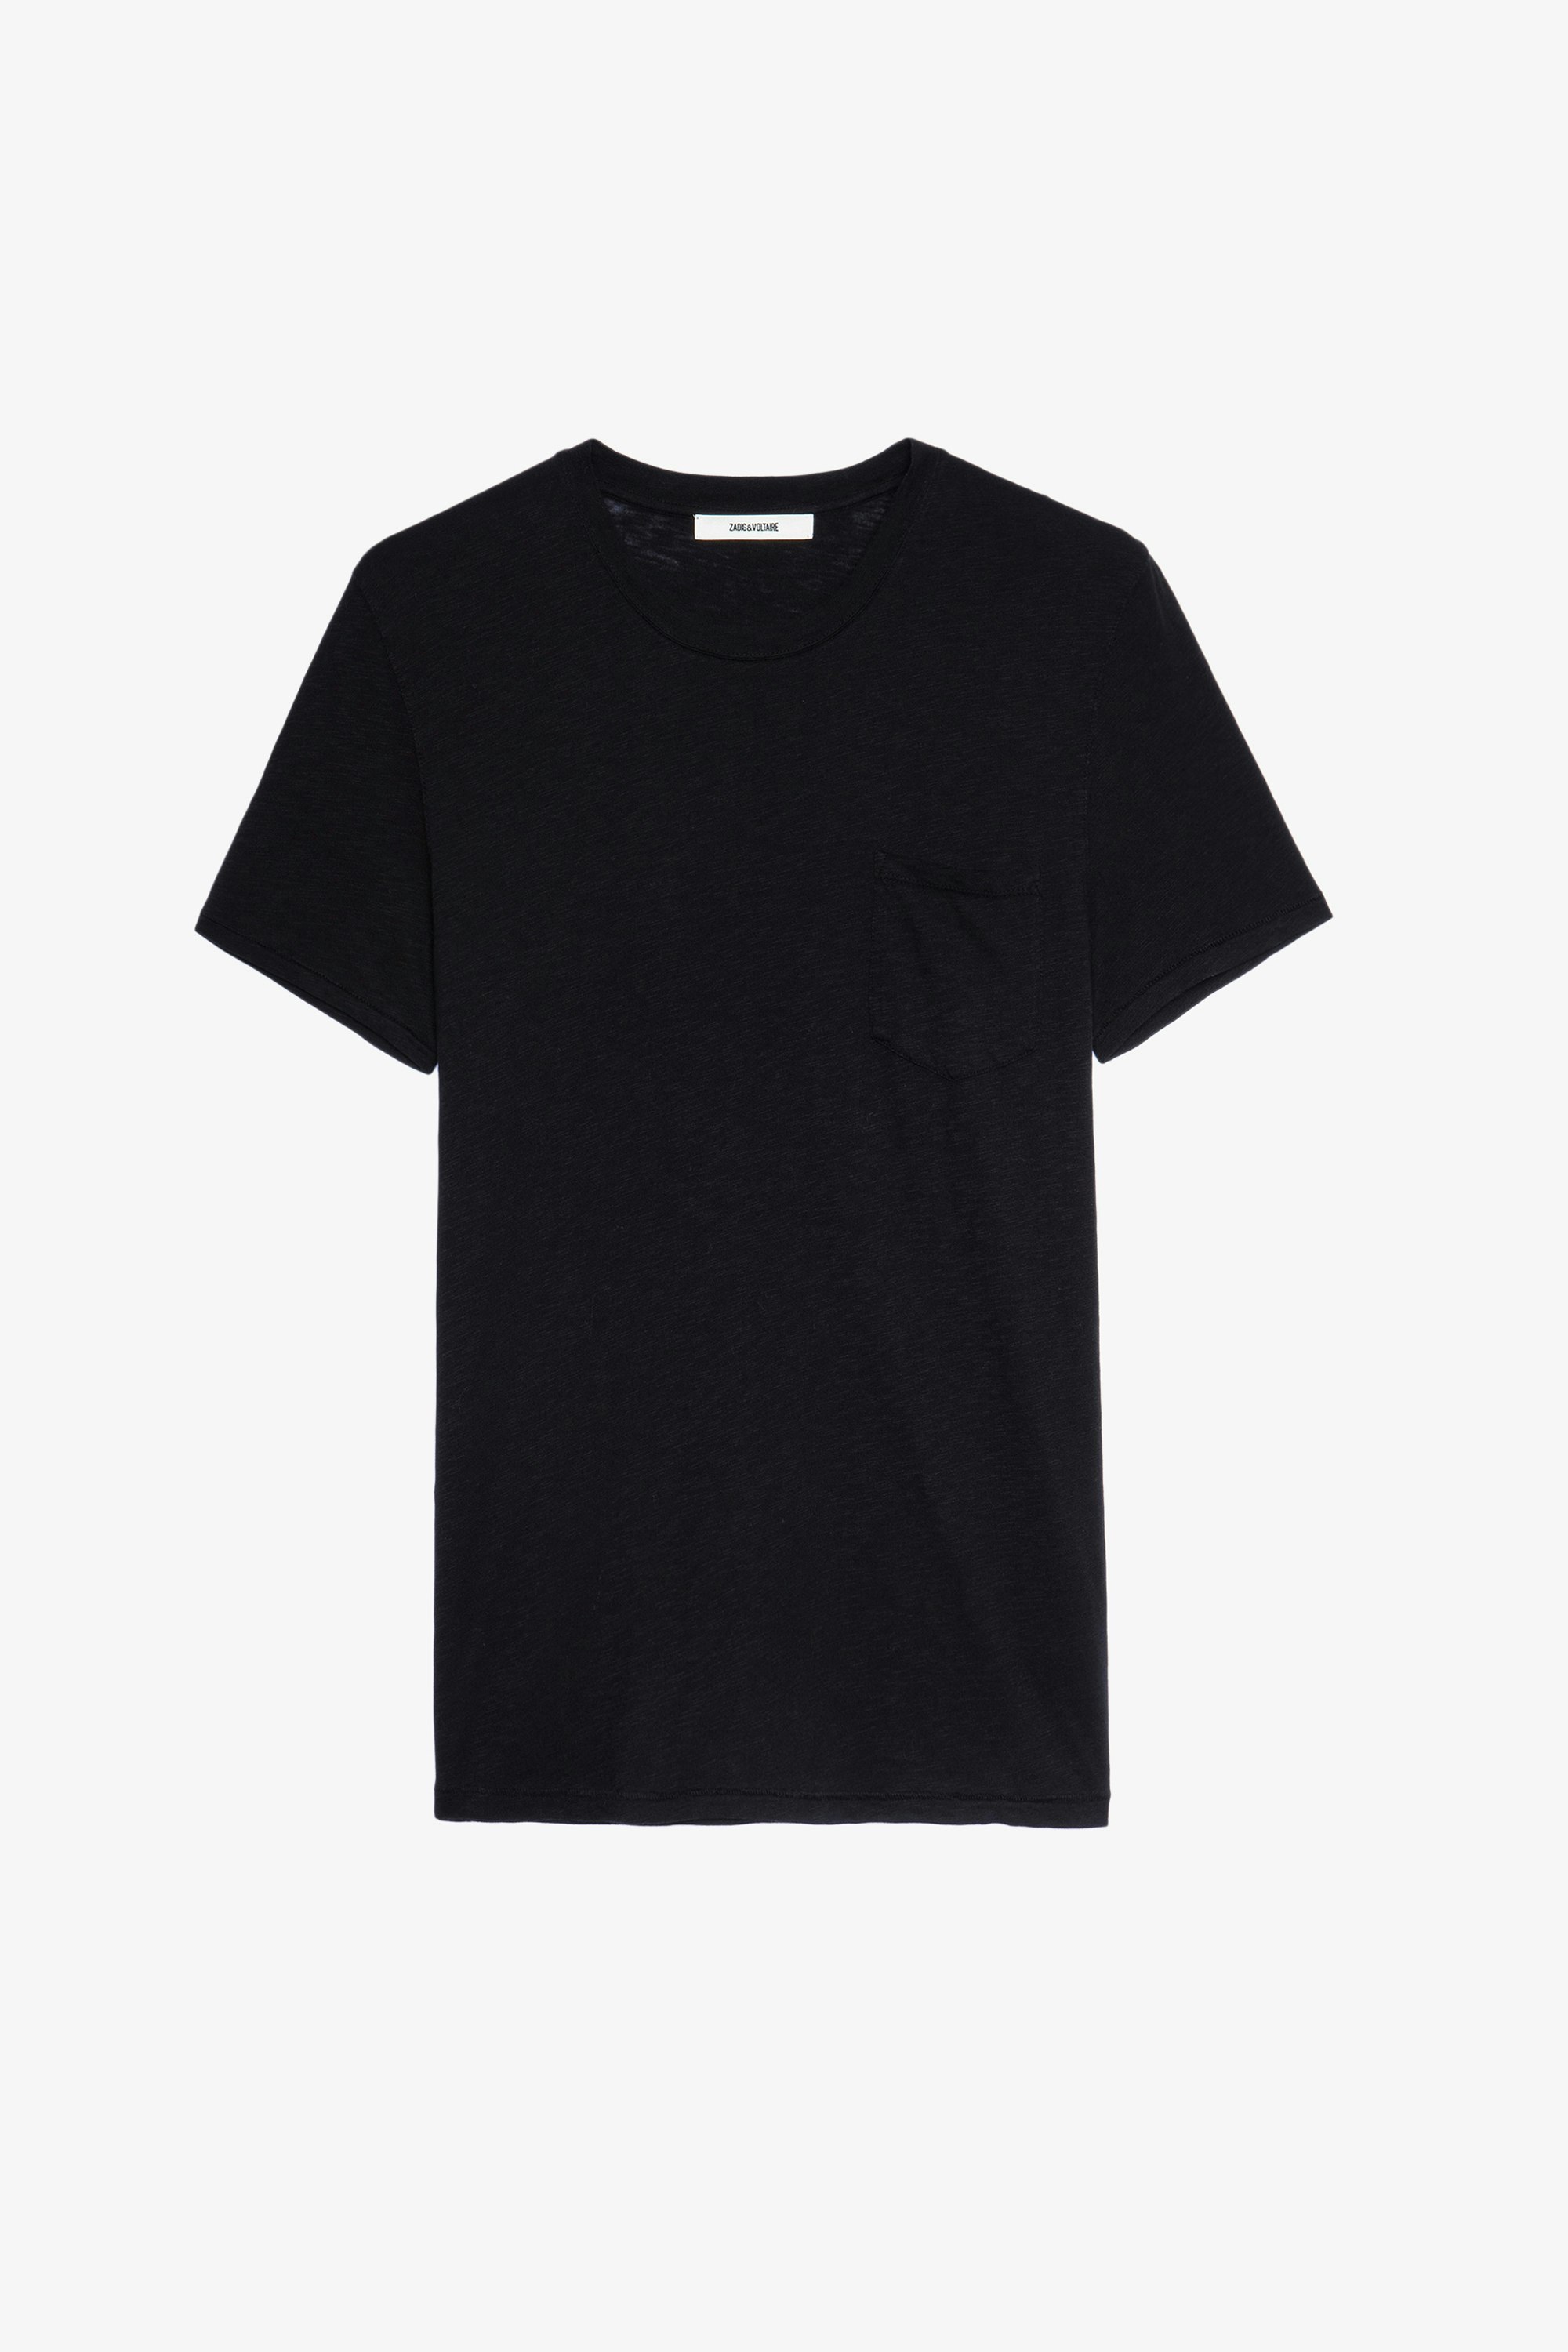 T-Shirt Stockholm - T-shirt bianca da uomo con scollo rotondo